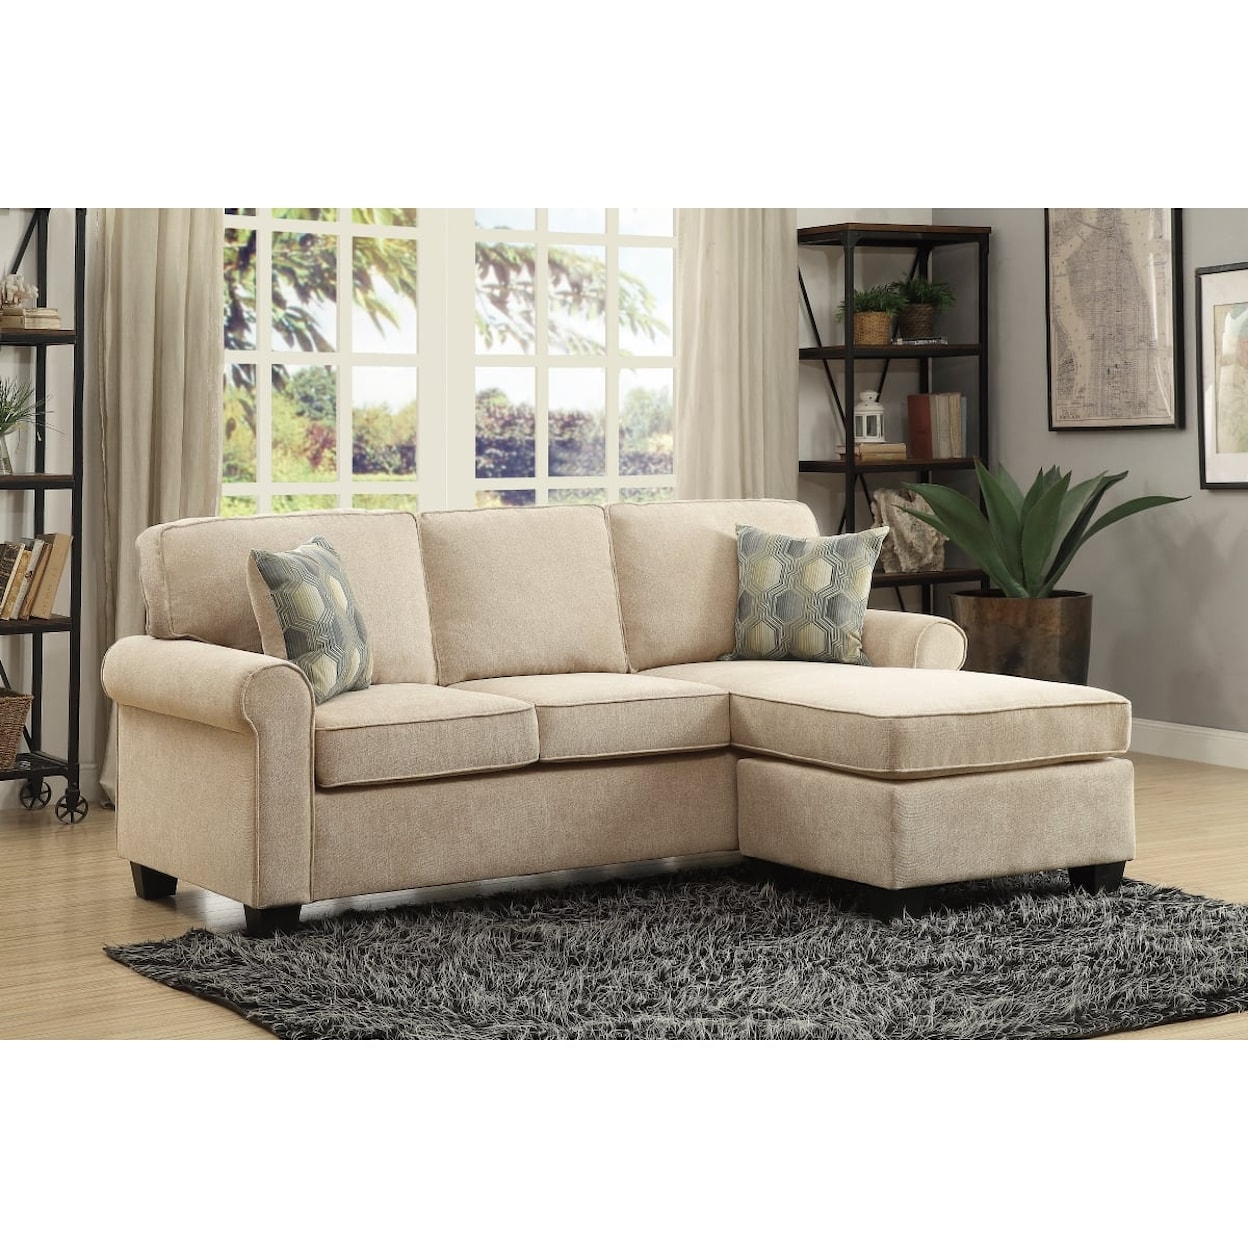 Homelegance Furniture Clumber Reversible Sofa Chaise